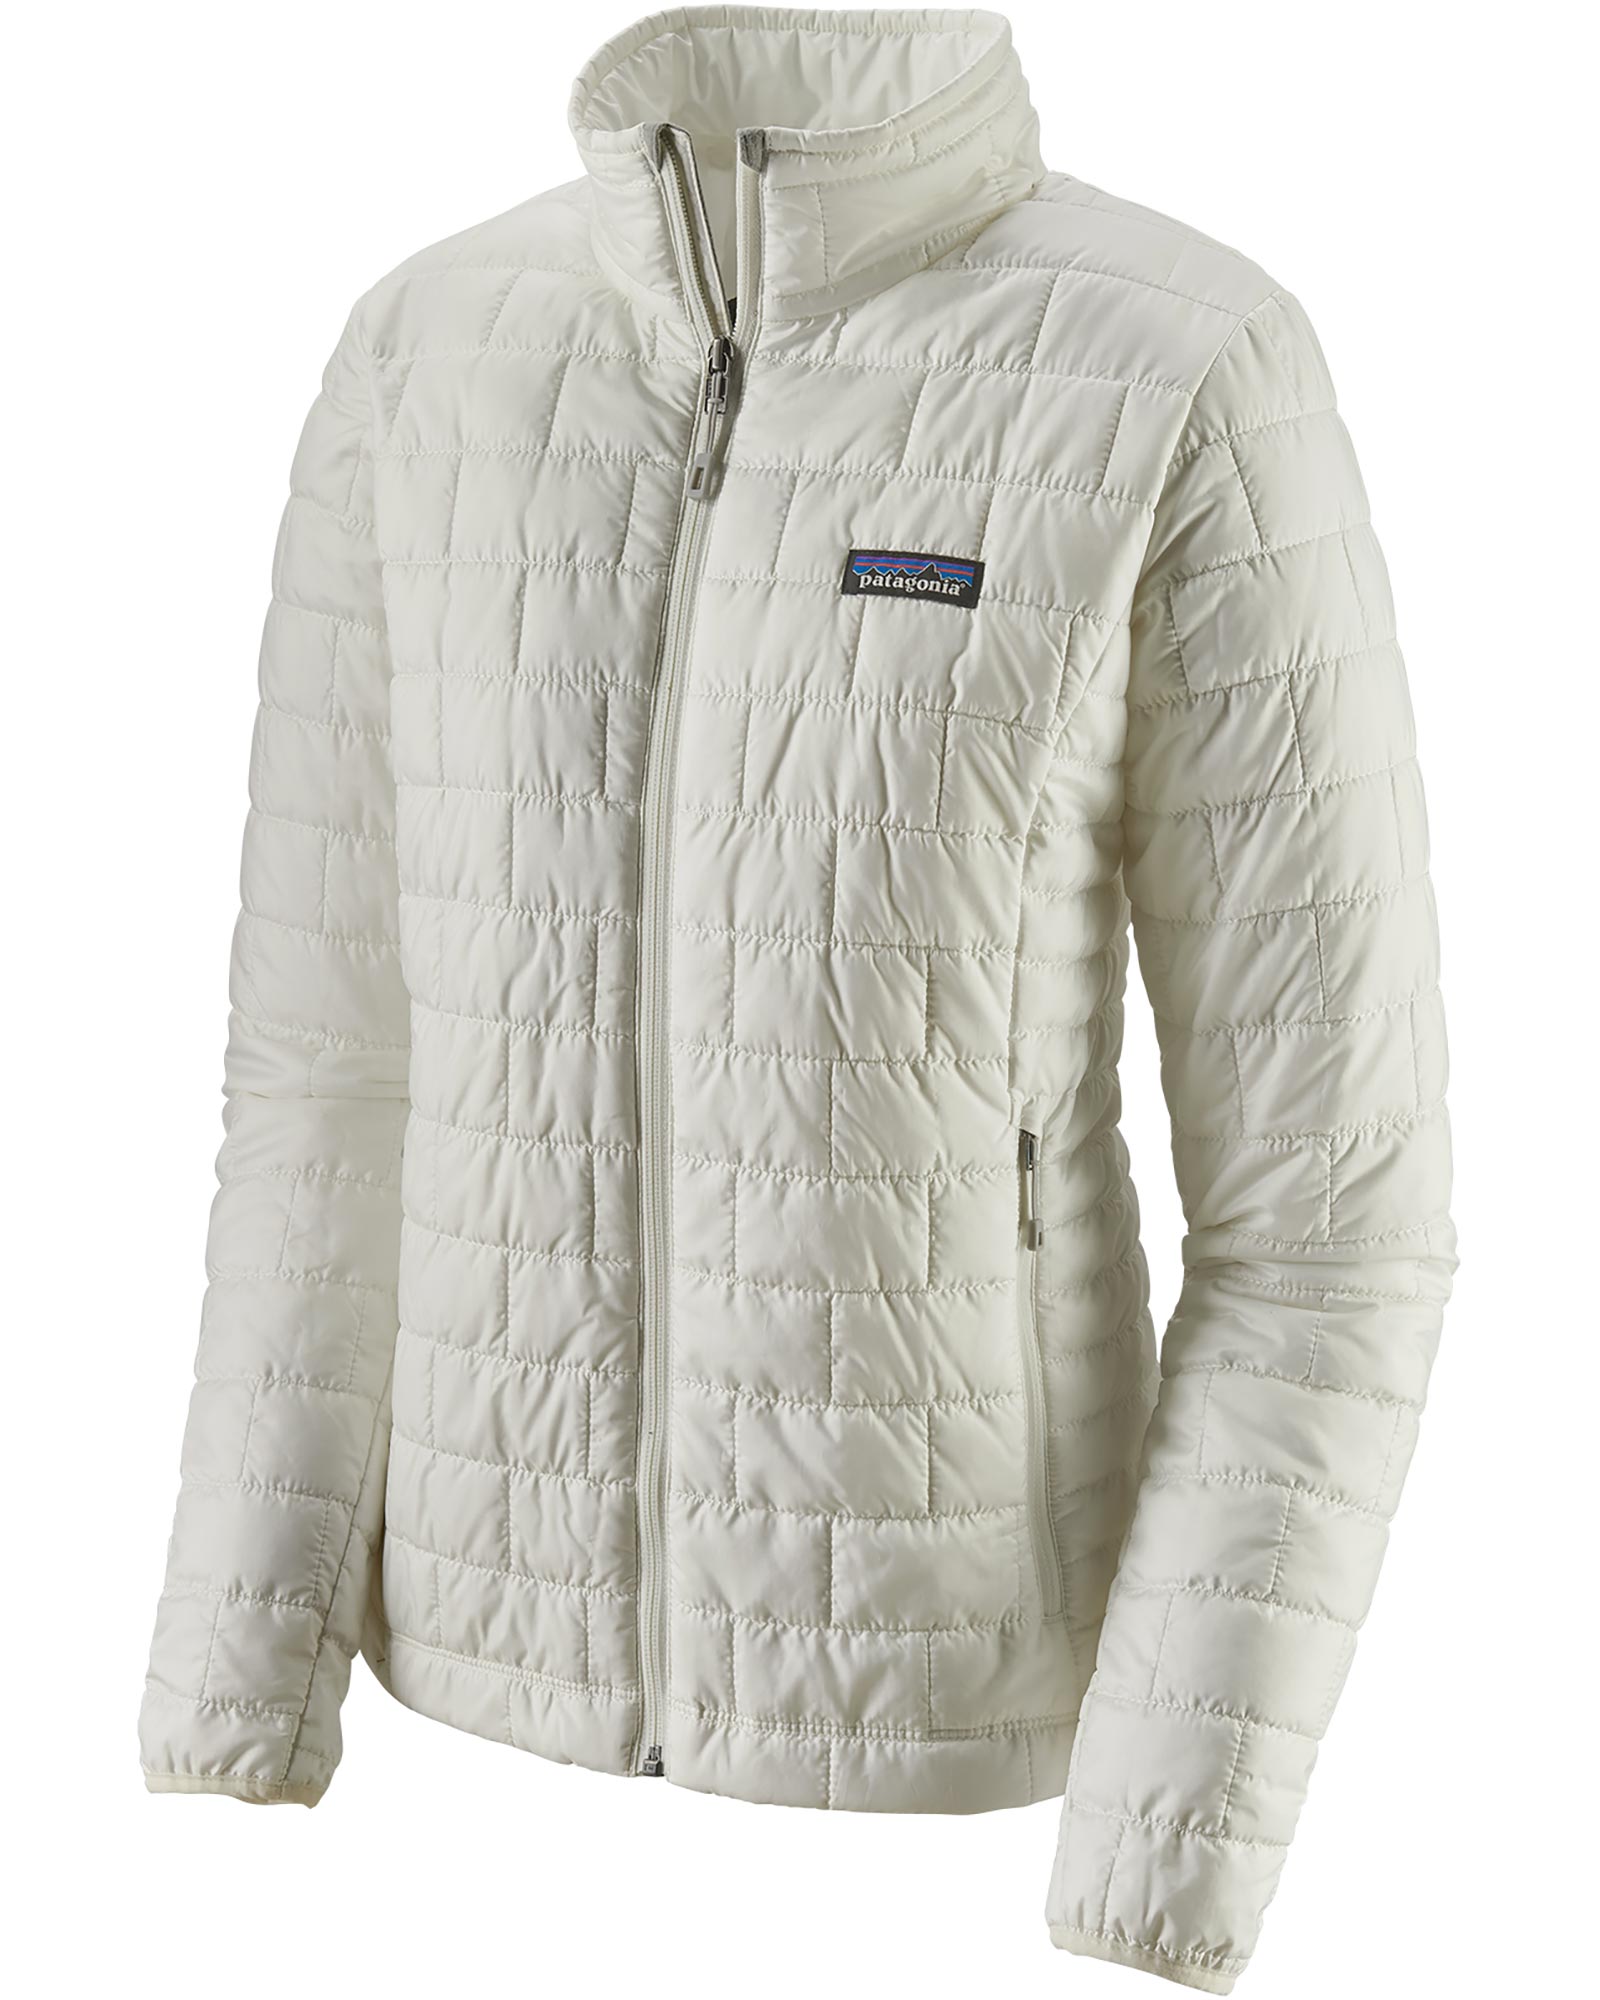 Patagonia Nano Puff Women’s Insulated Jacket - Birch White L